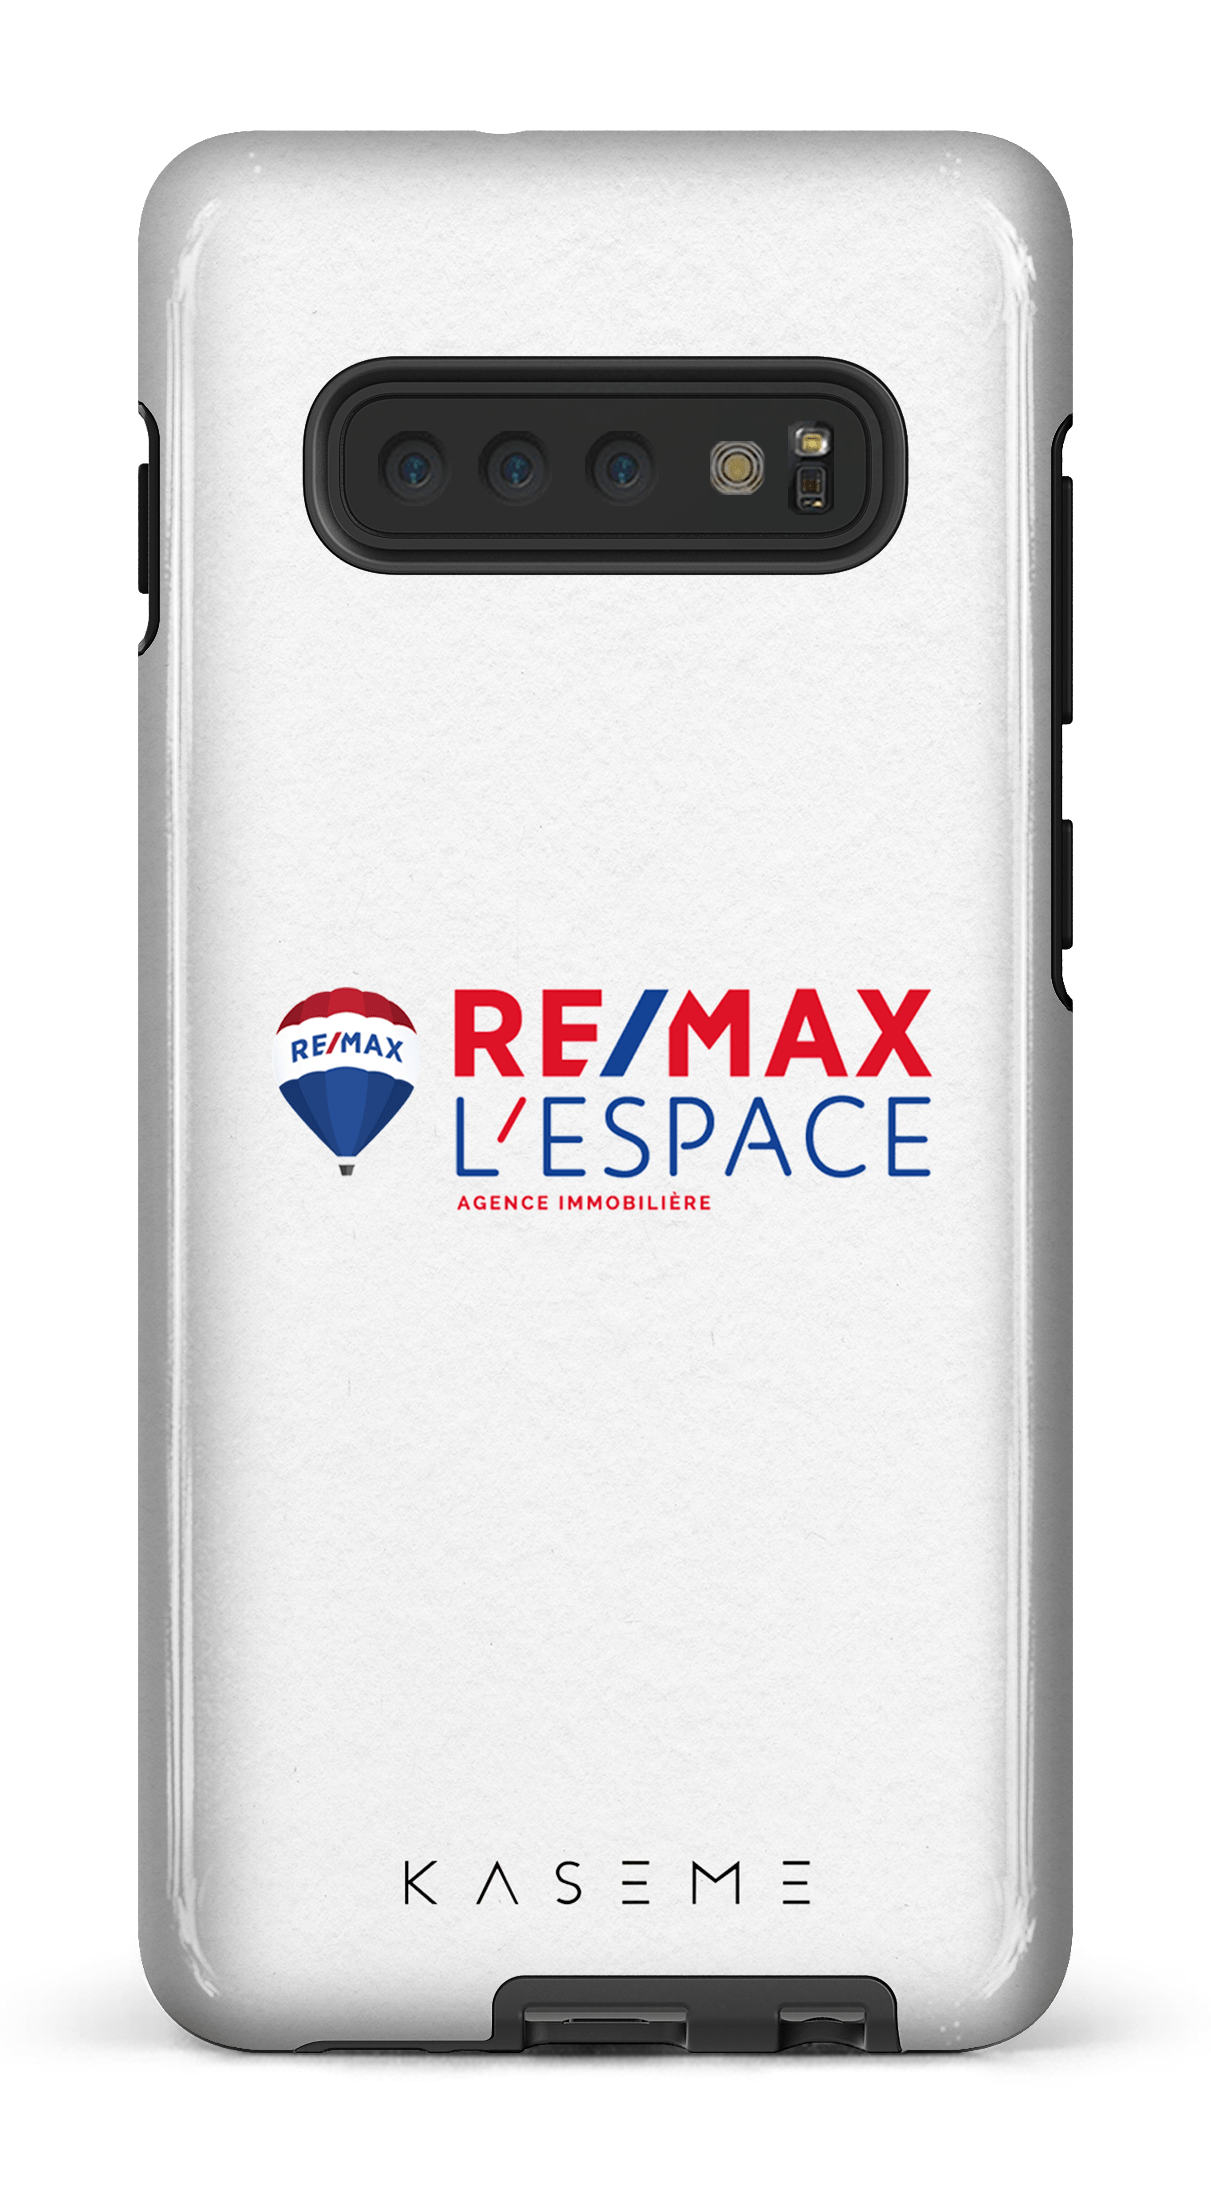 Remax L'Espace Blanc - Galaxy S10 Plus